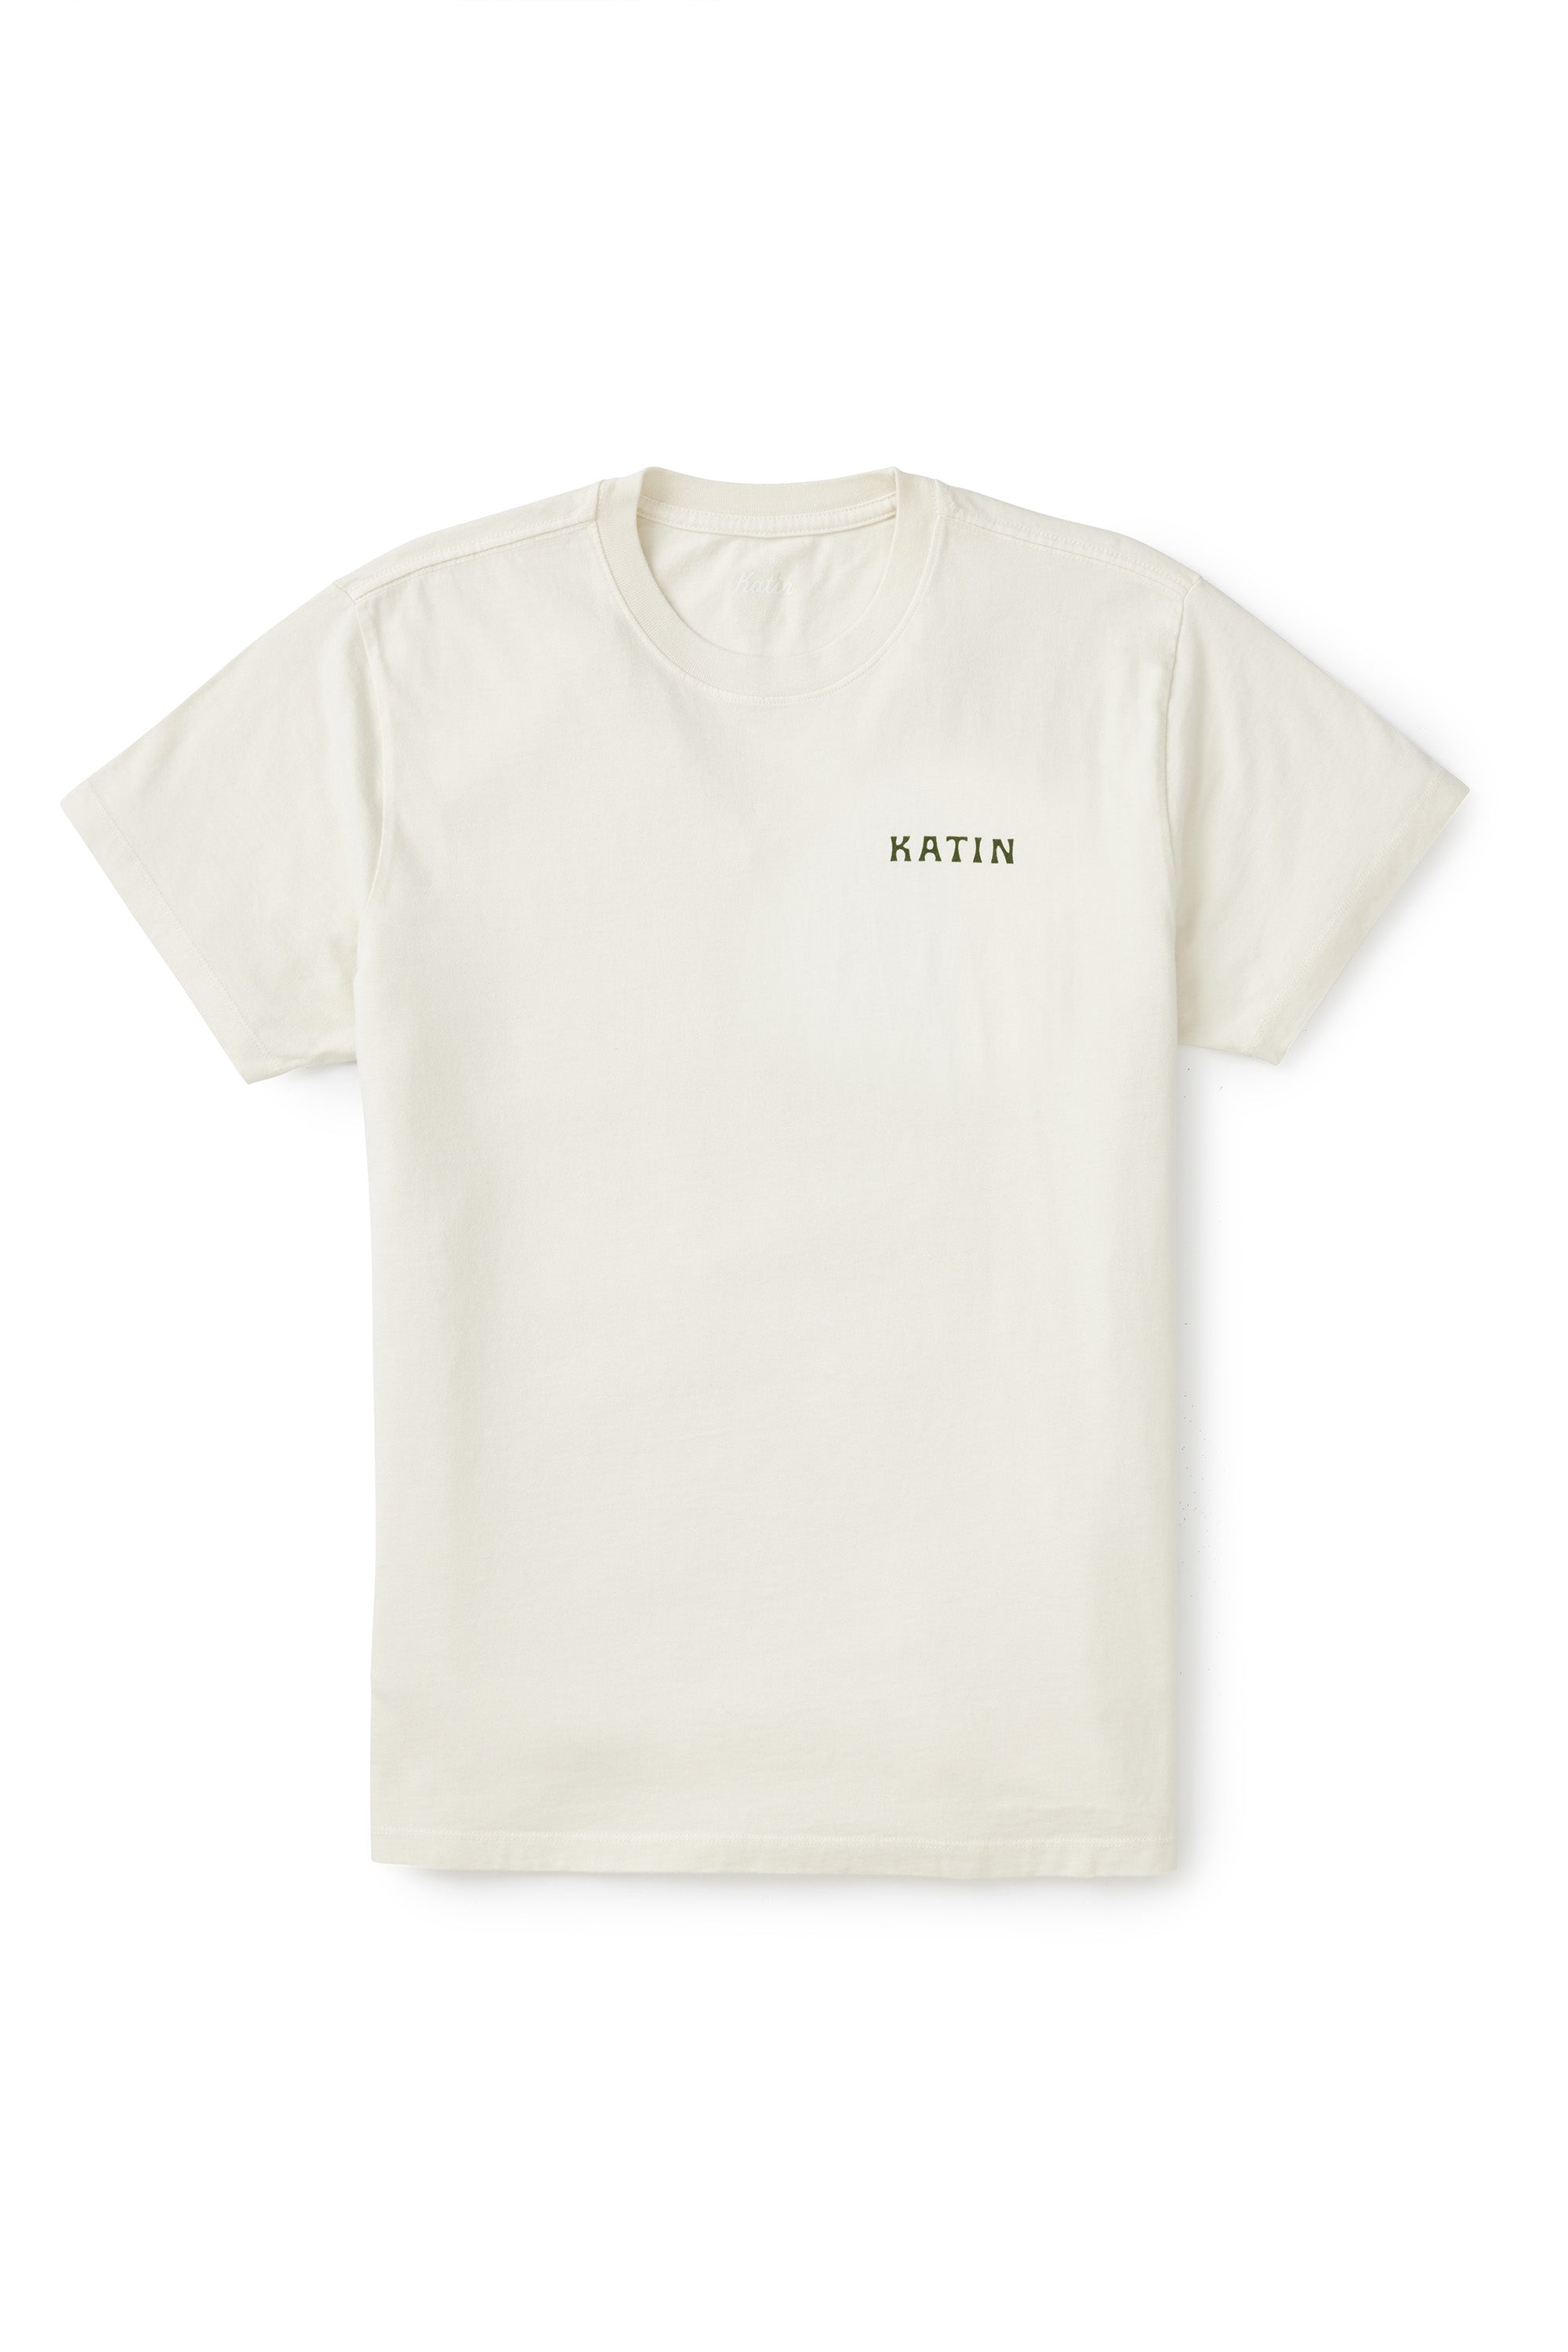 Vista-T-Shirt | Katin USA